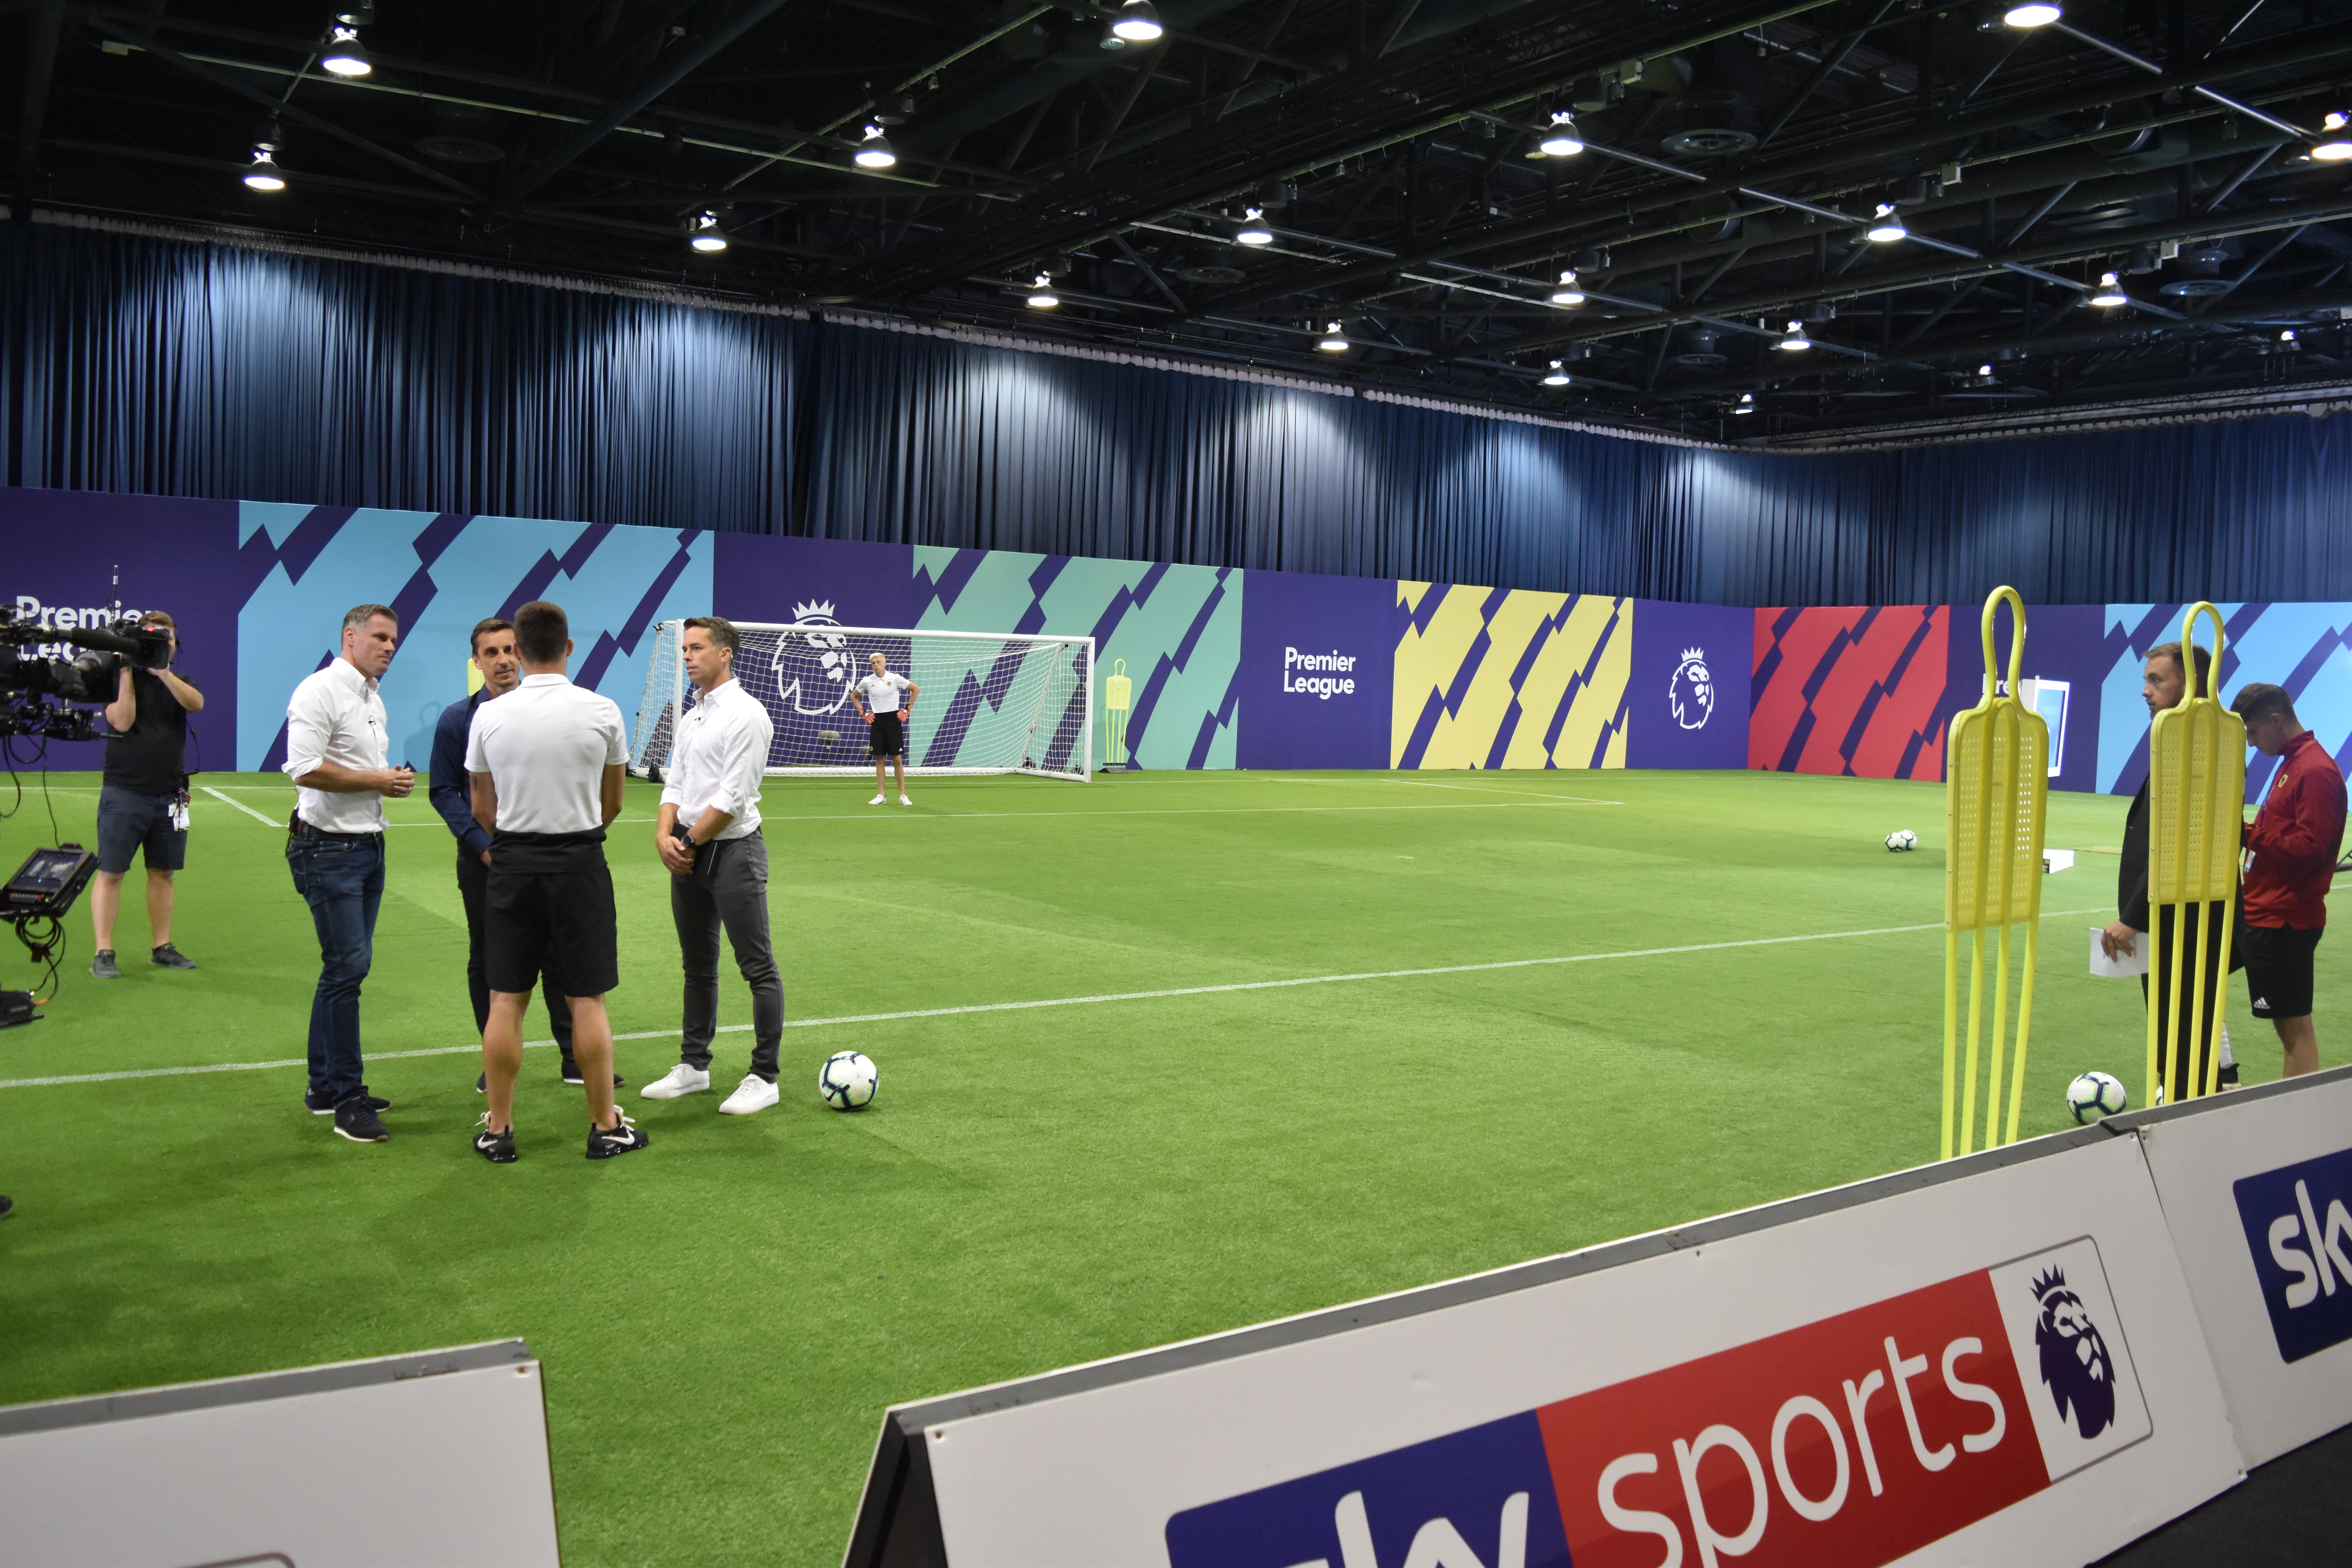 Premier League Launch - Set up in Exchange Hall